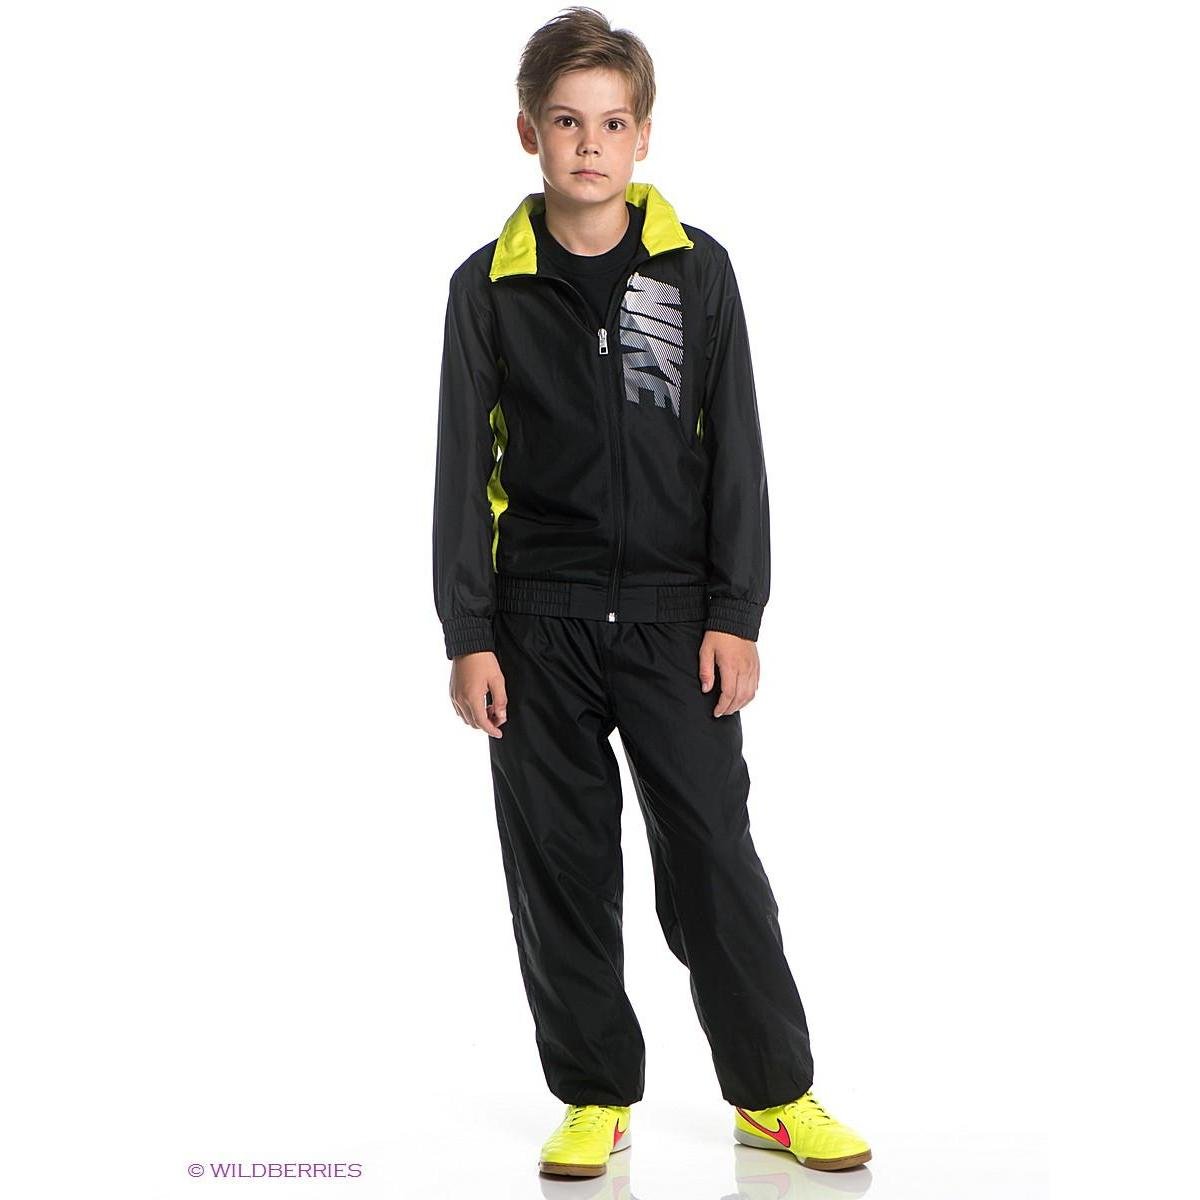 Спортивный костюм мальчику 10. Спортивный костюм для мальчика Nike. Спортивный костюм для подростка мальчика. Подростковые спортивные костюмы Nike. Костюм спортивный подростковый найк.